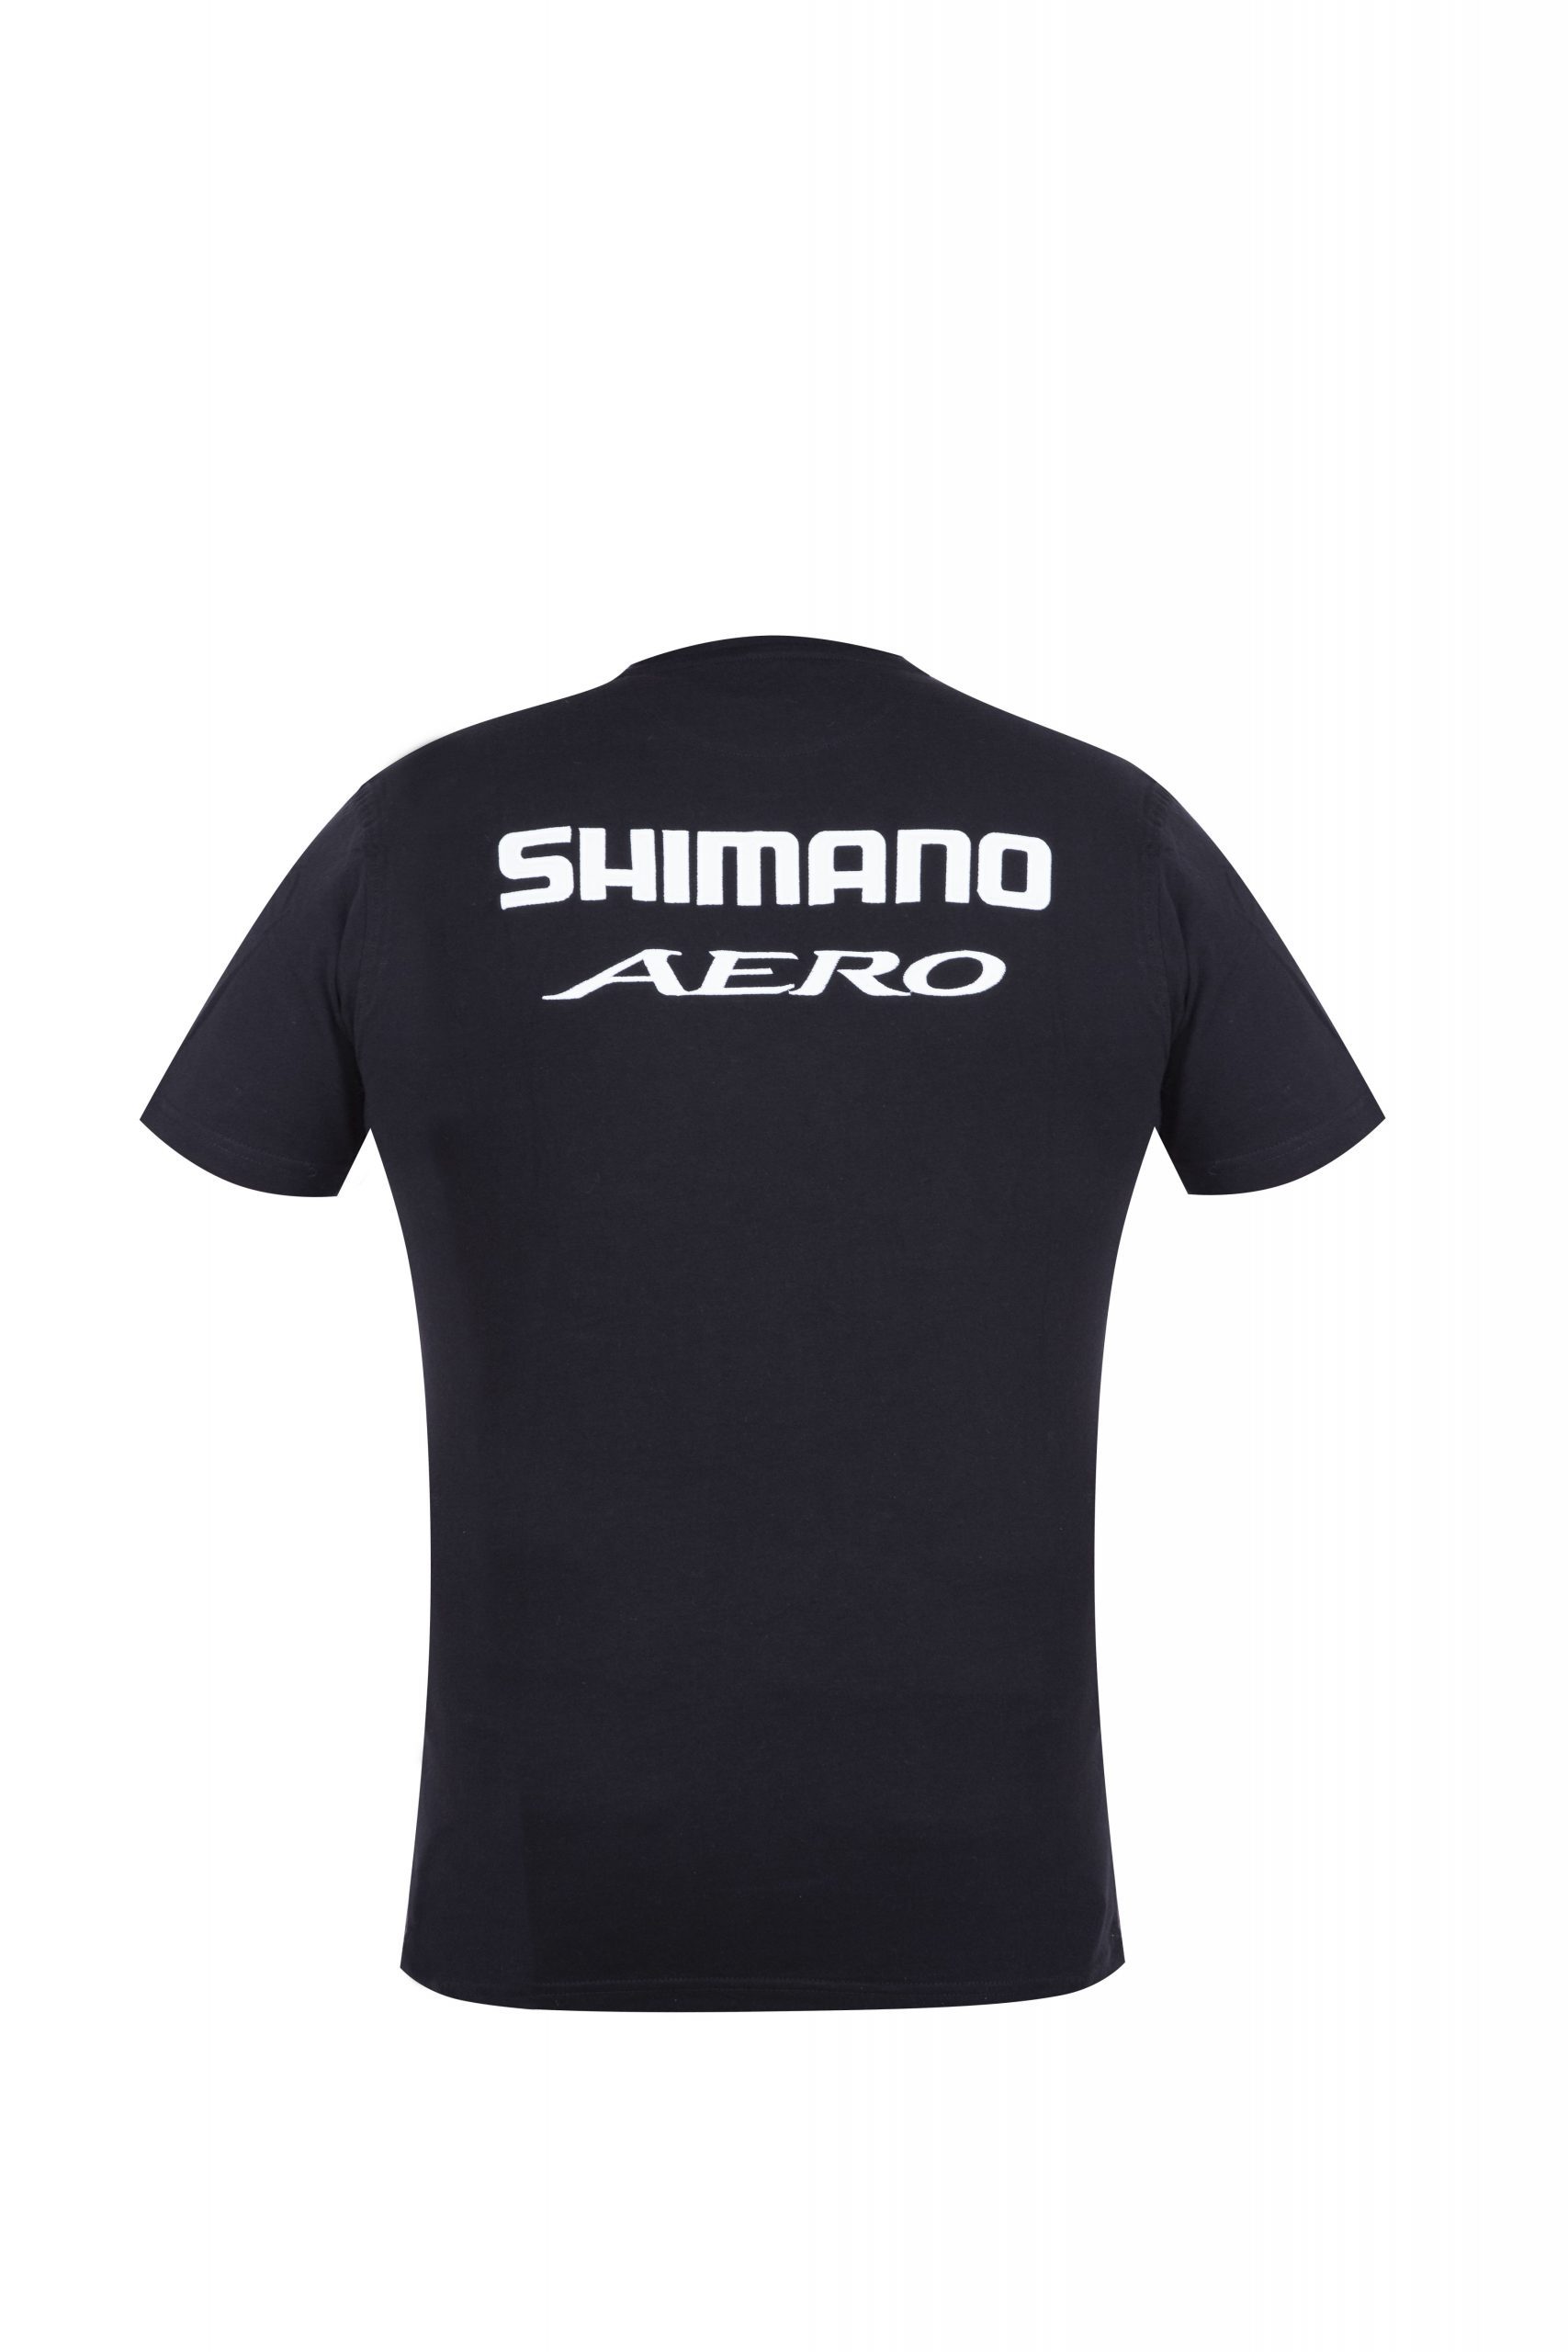 Shimano Aero Black Jacket